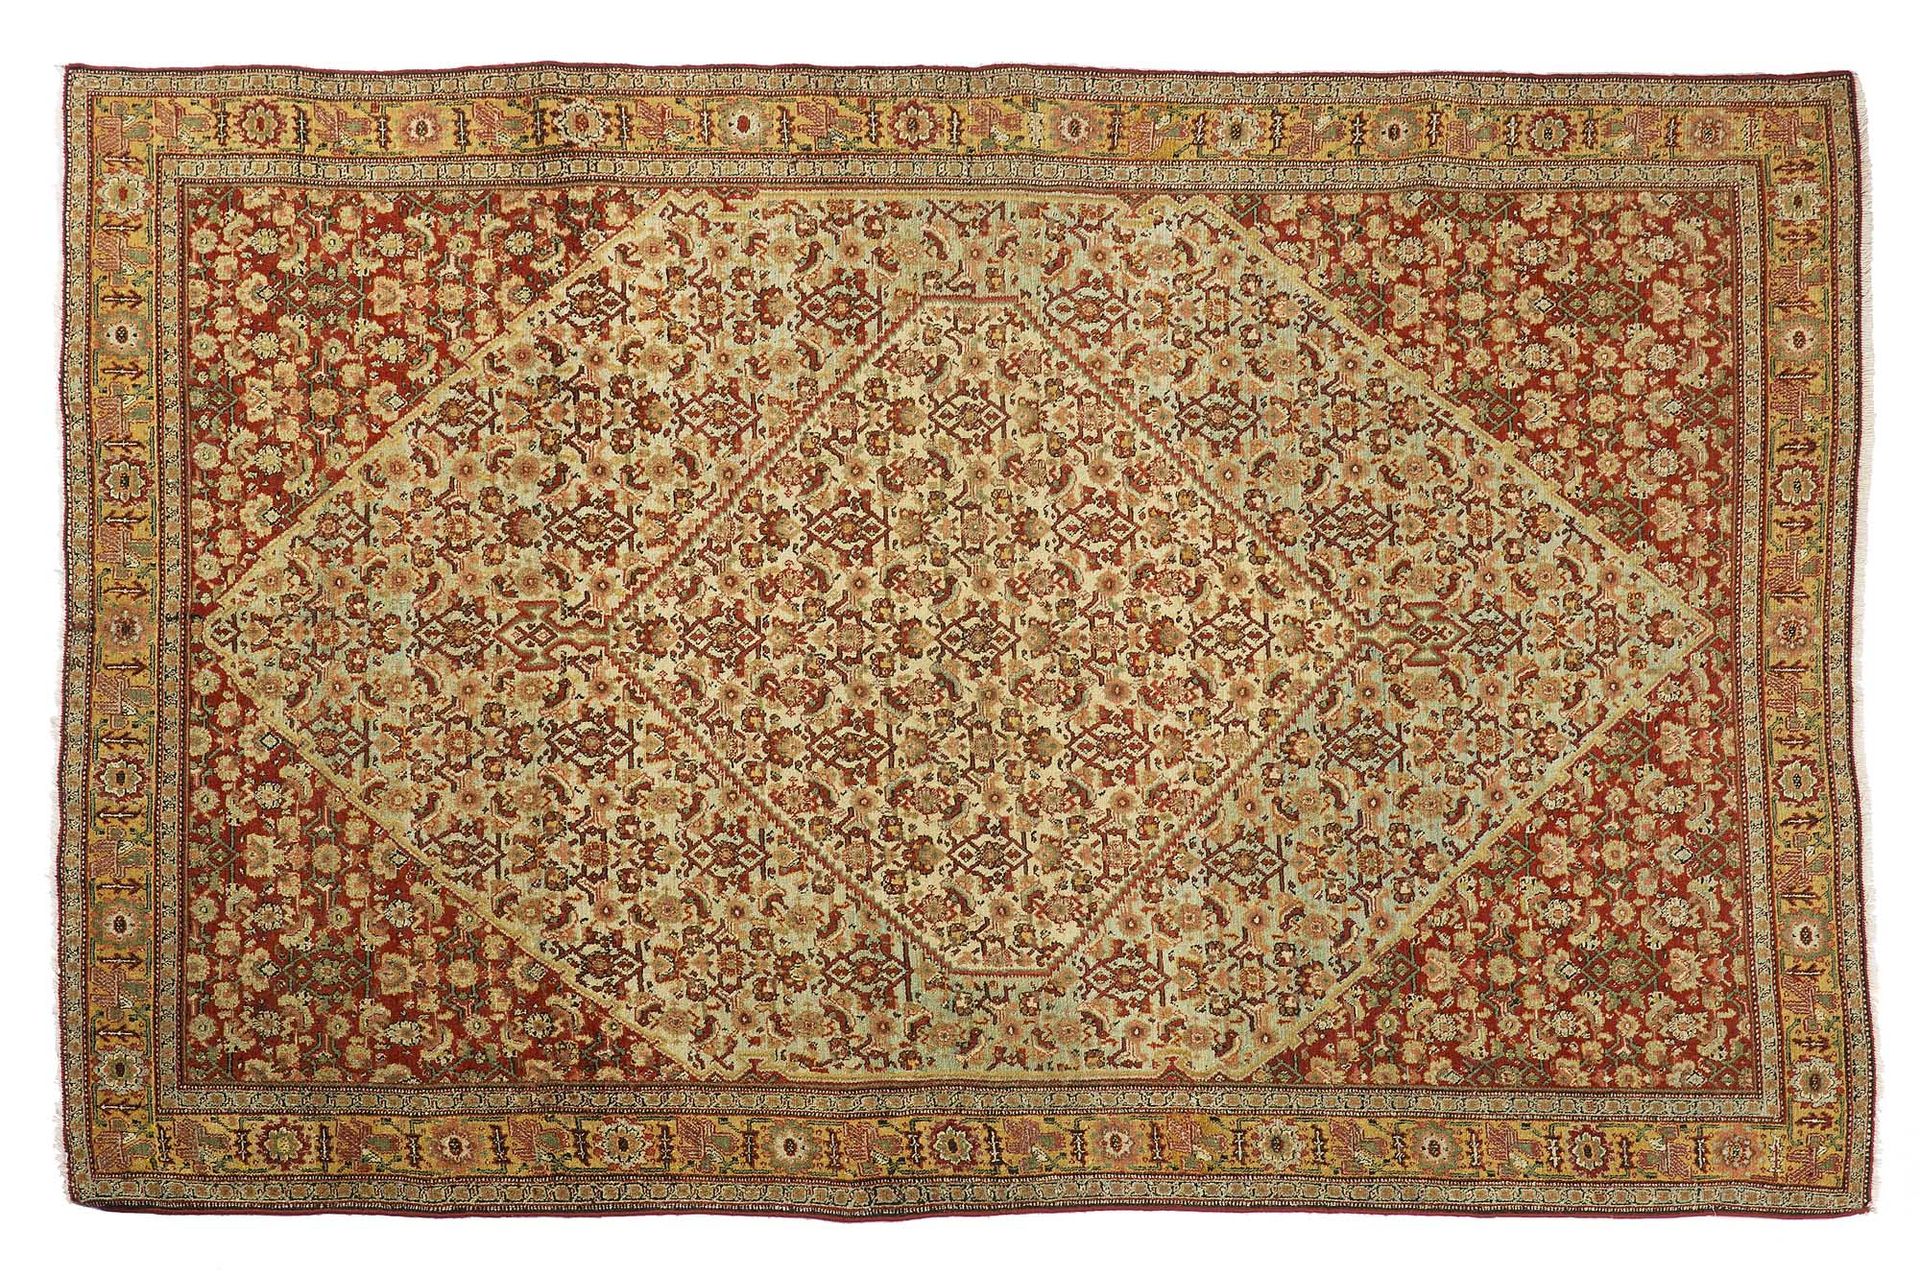 Null Fine SENNEH carpet (Persia), late 19th century

Dimensions : 196 x 128cm

T&hellip;